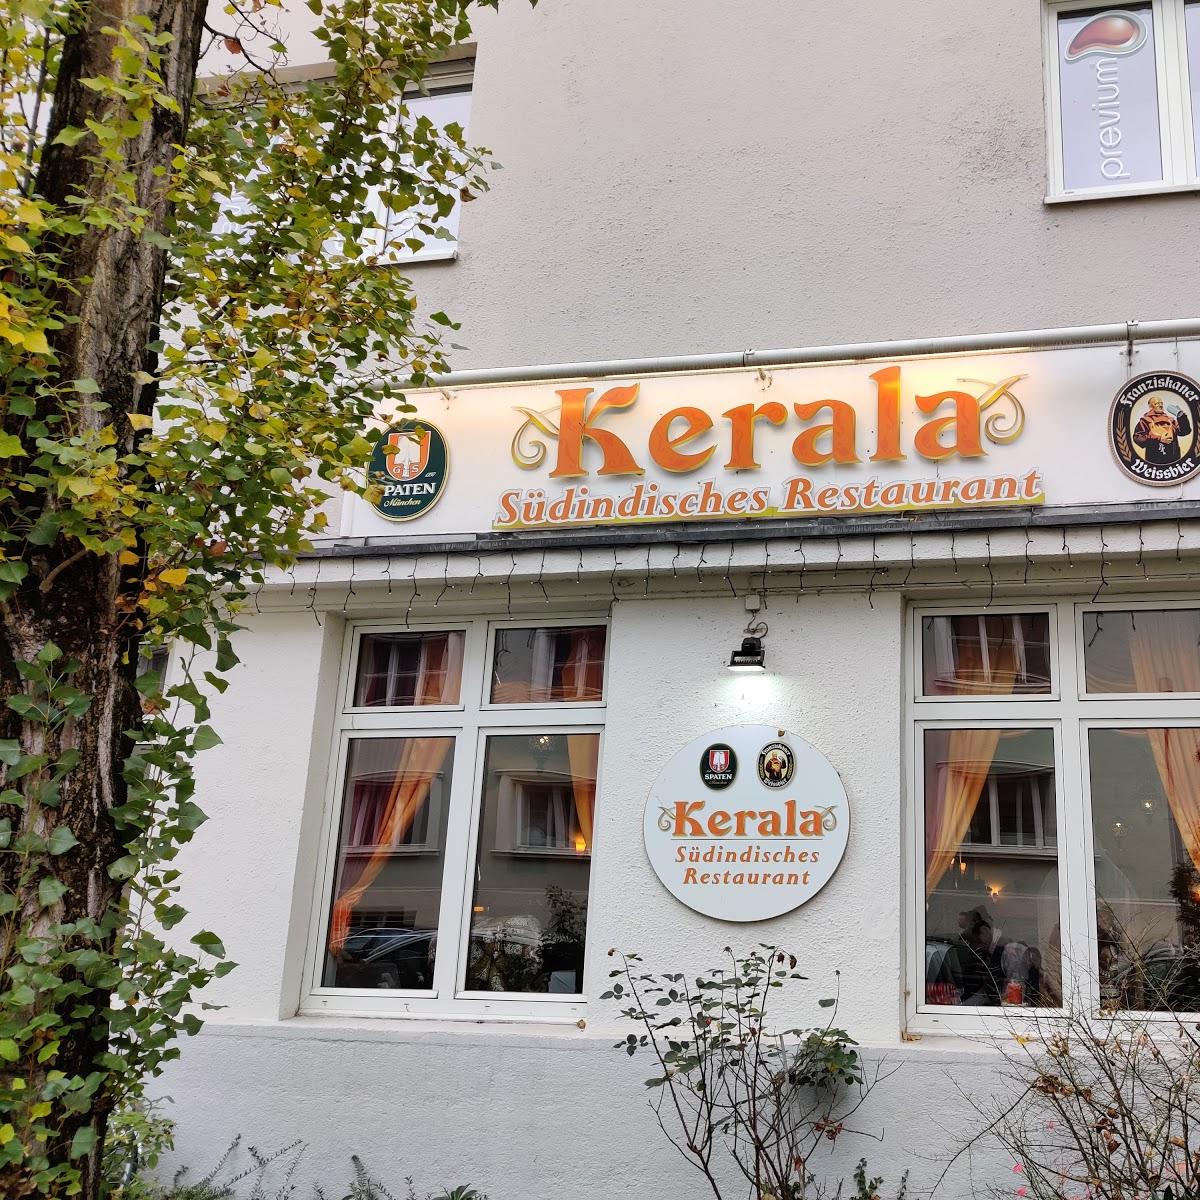 Restaurant "Kerala Restaurant" in München